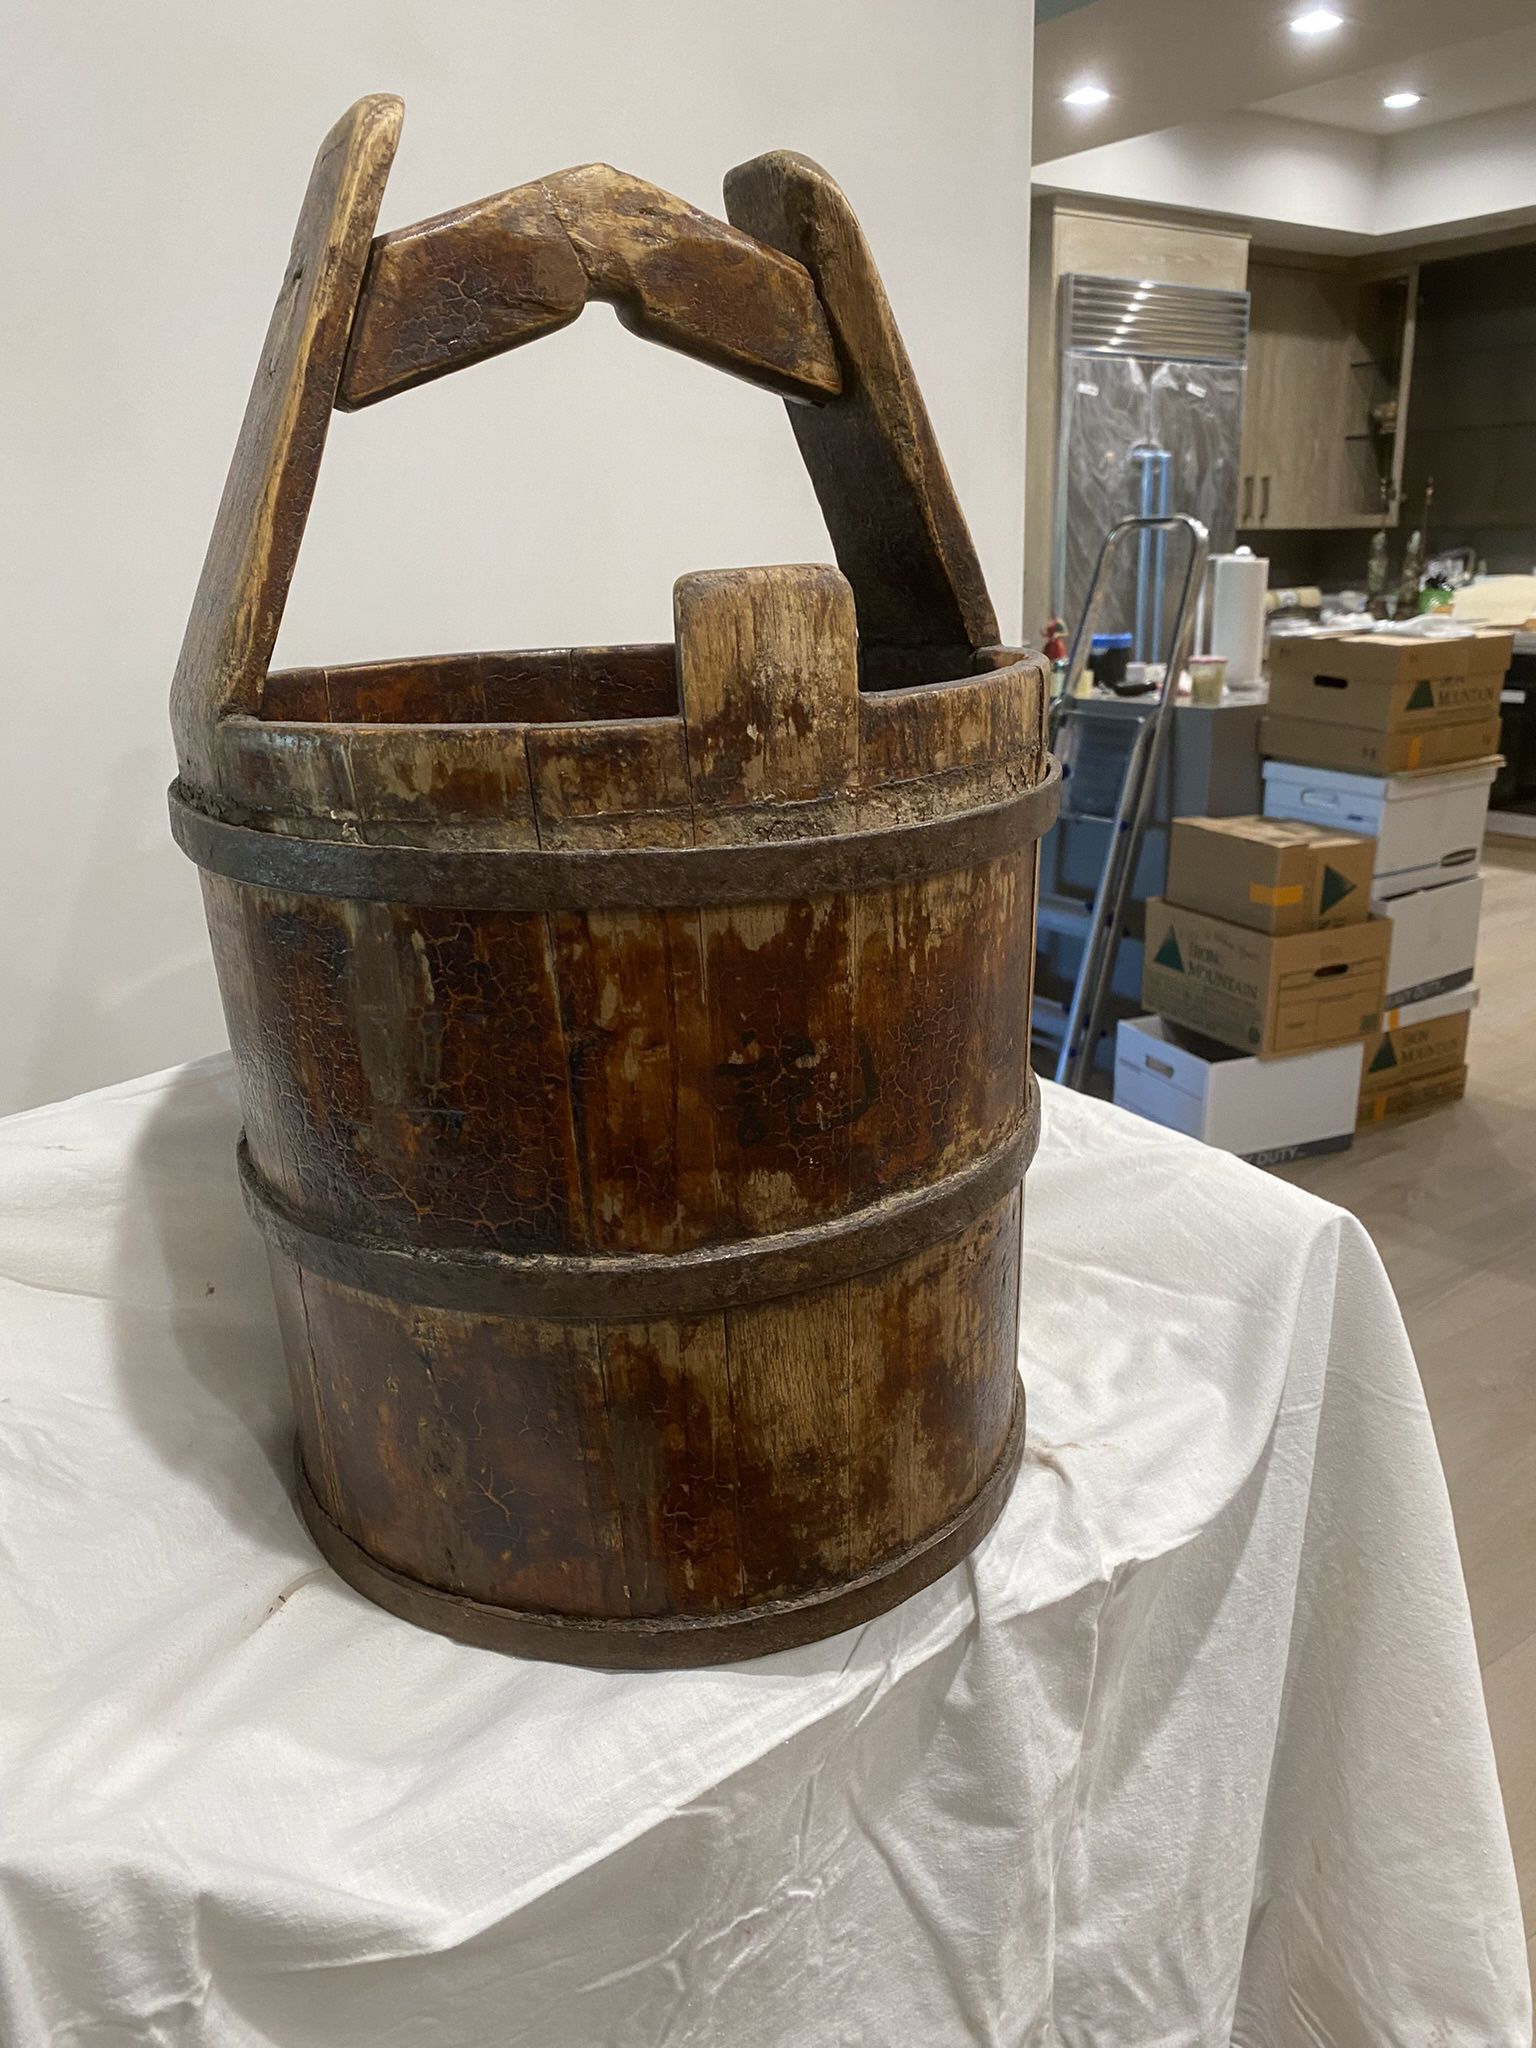 Vintage Asian Wood Bucket